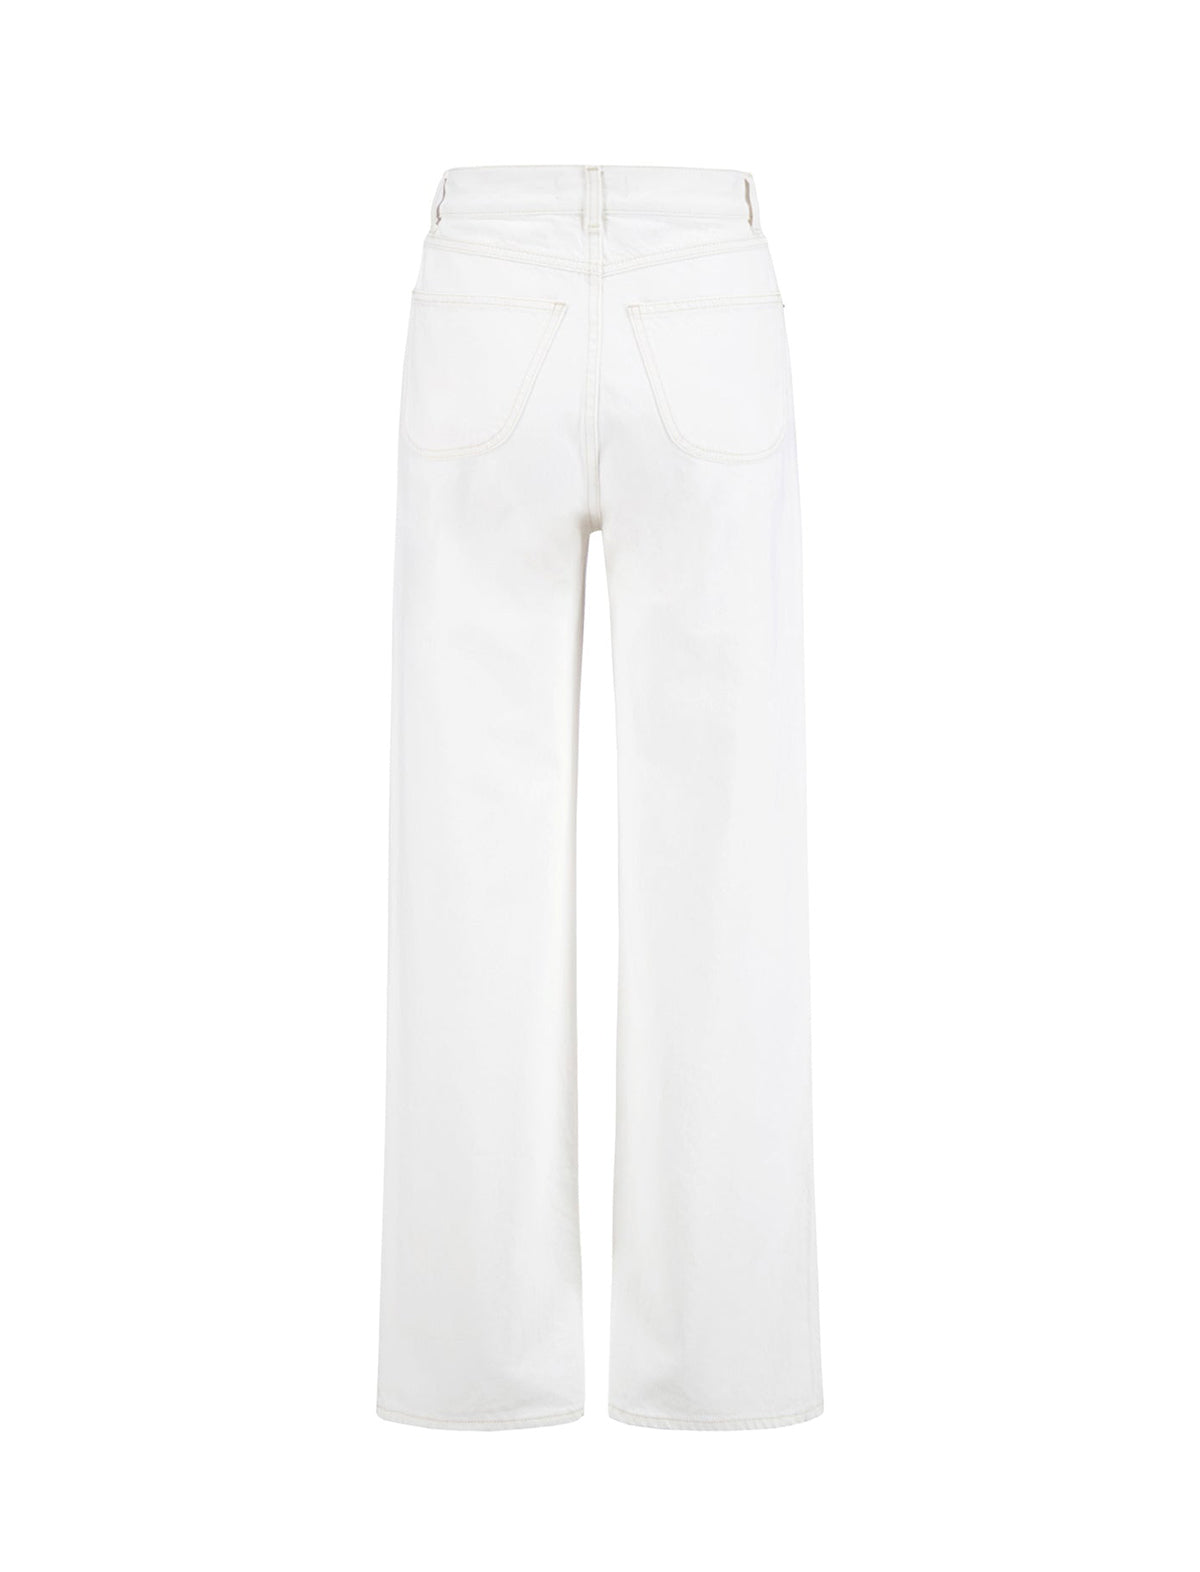 BEAUFILLE Elipse Denim Jeans in White